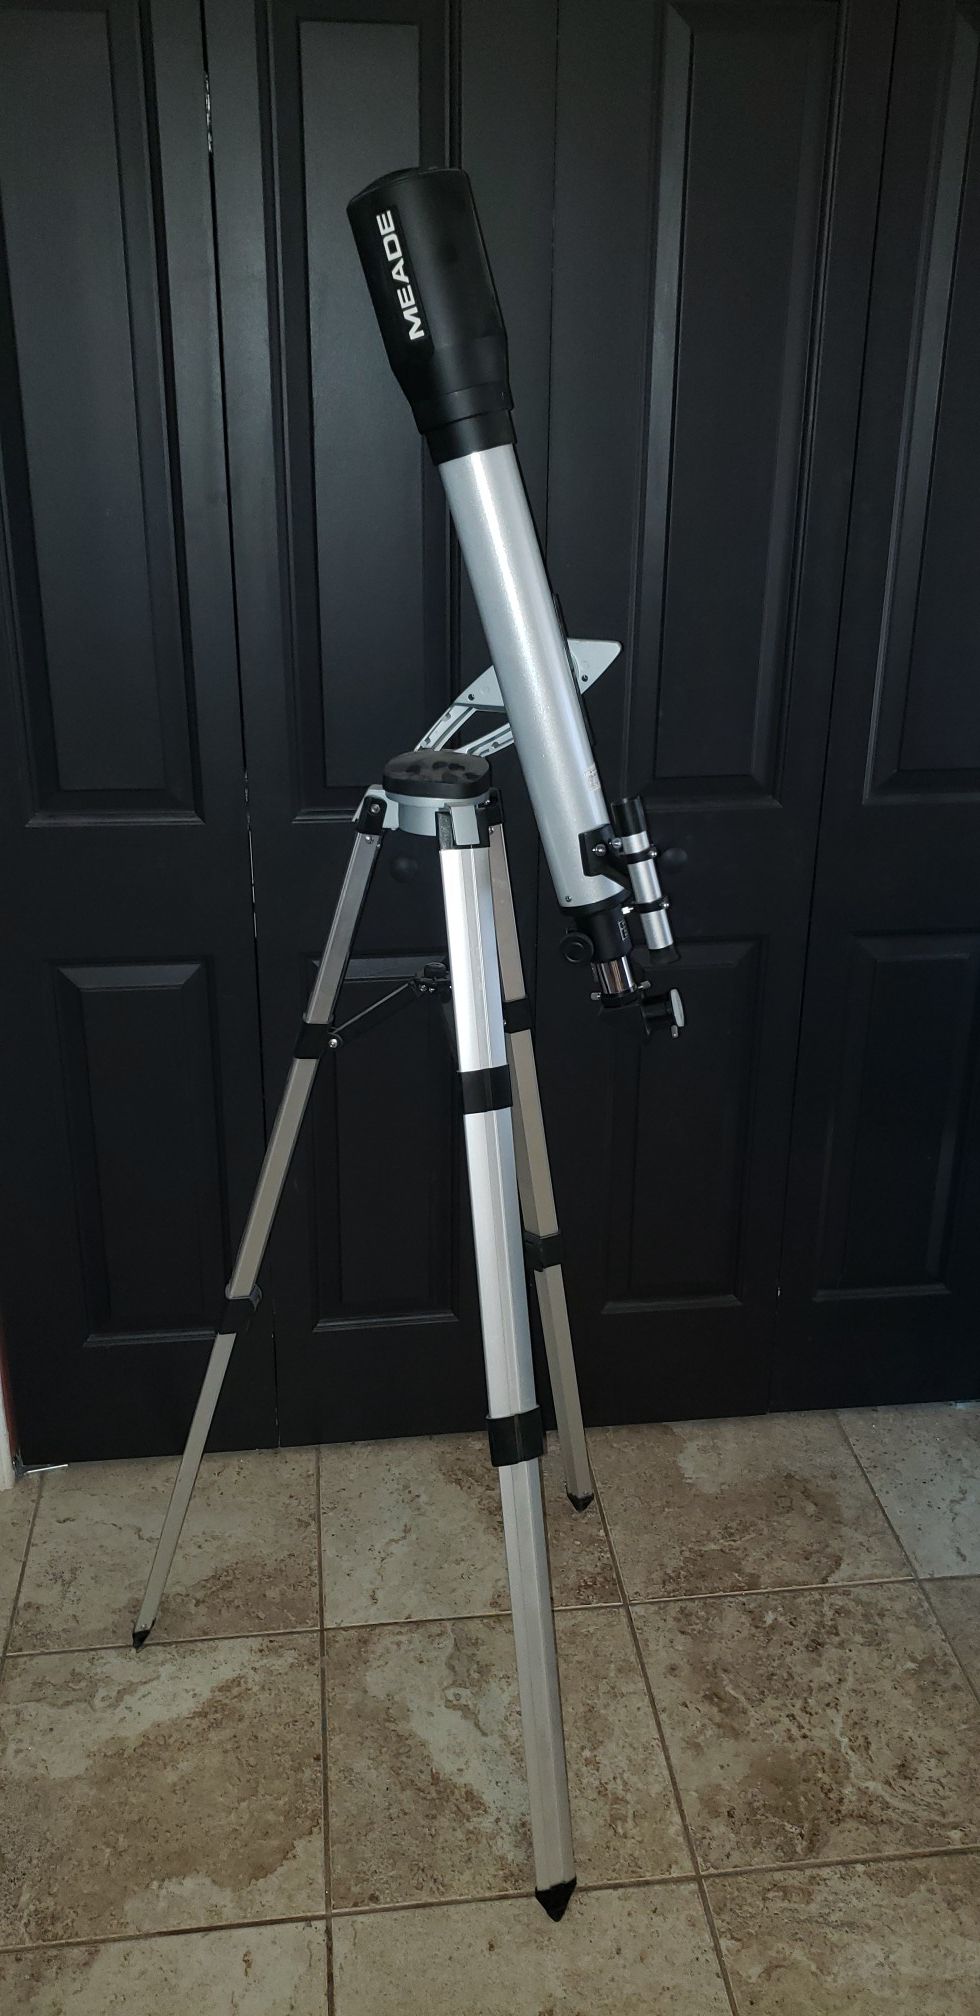 Meade beginner telescope with 2 eyepieces